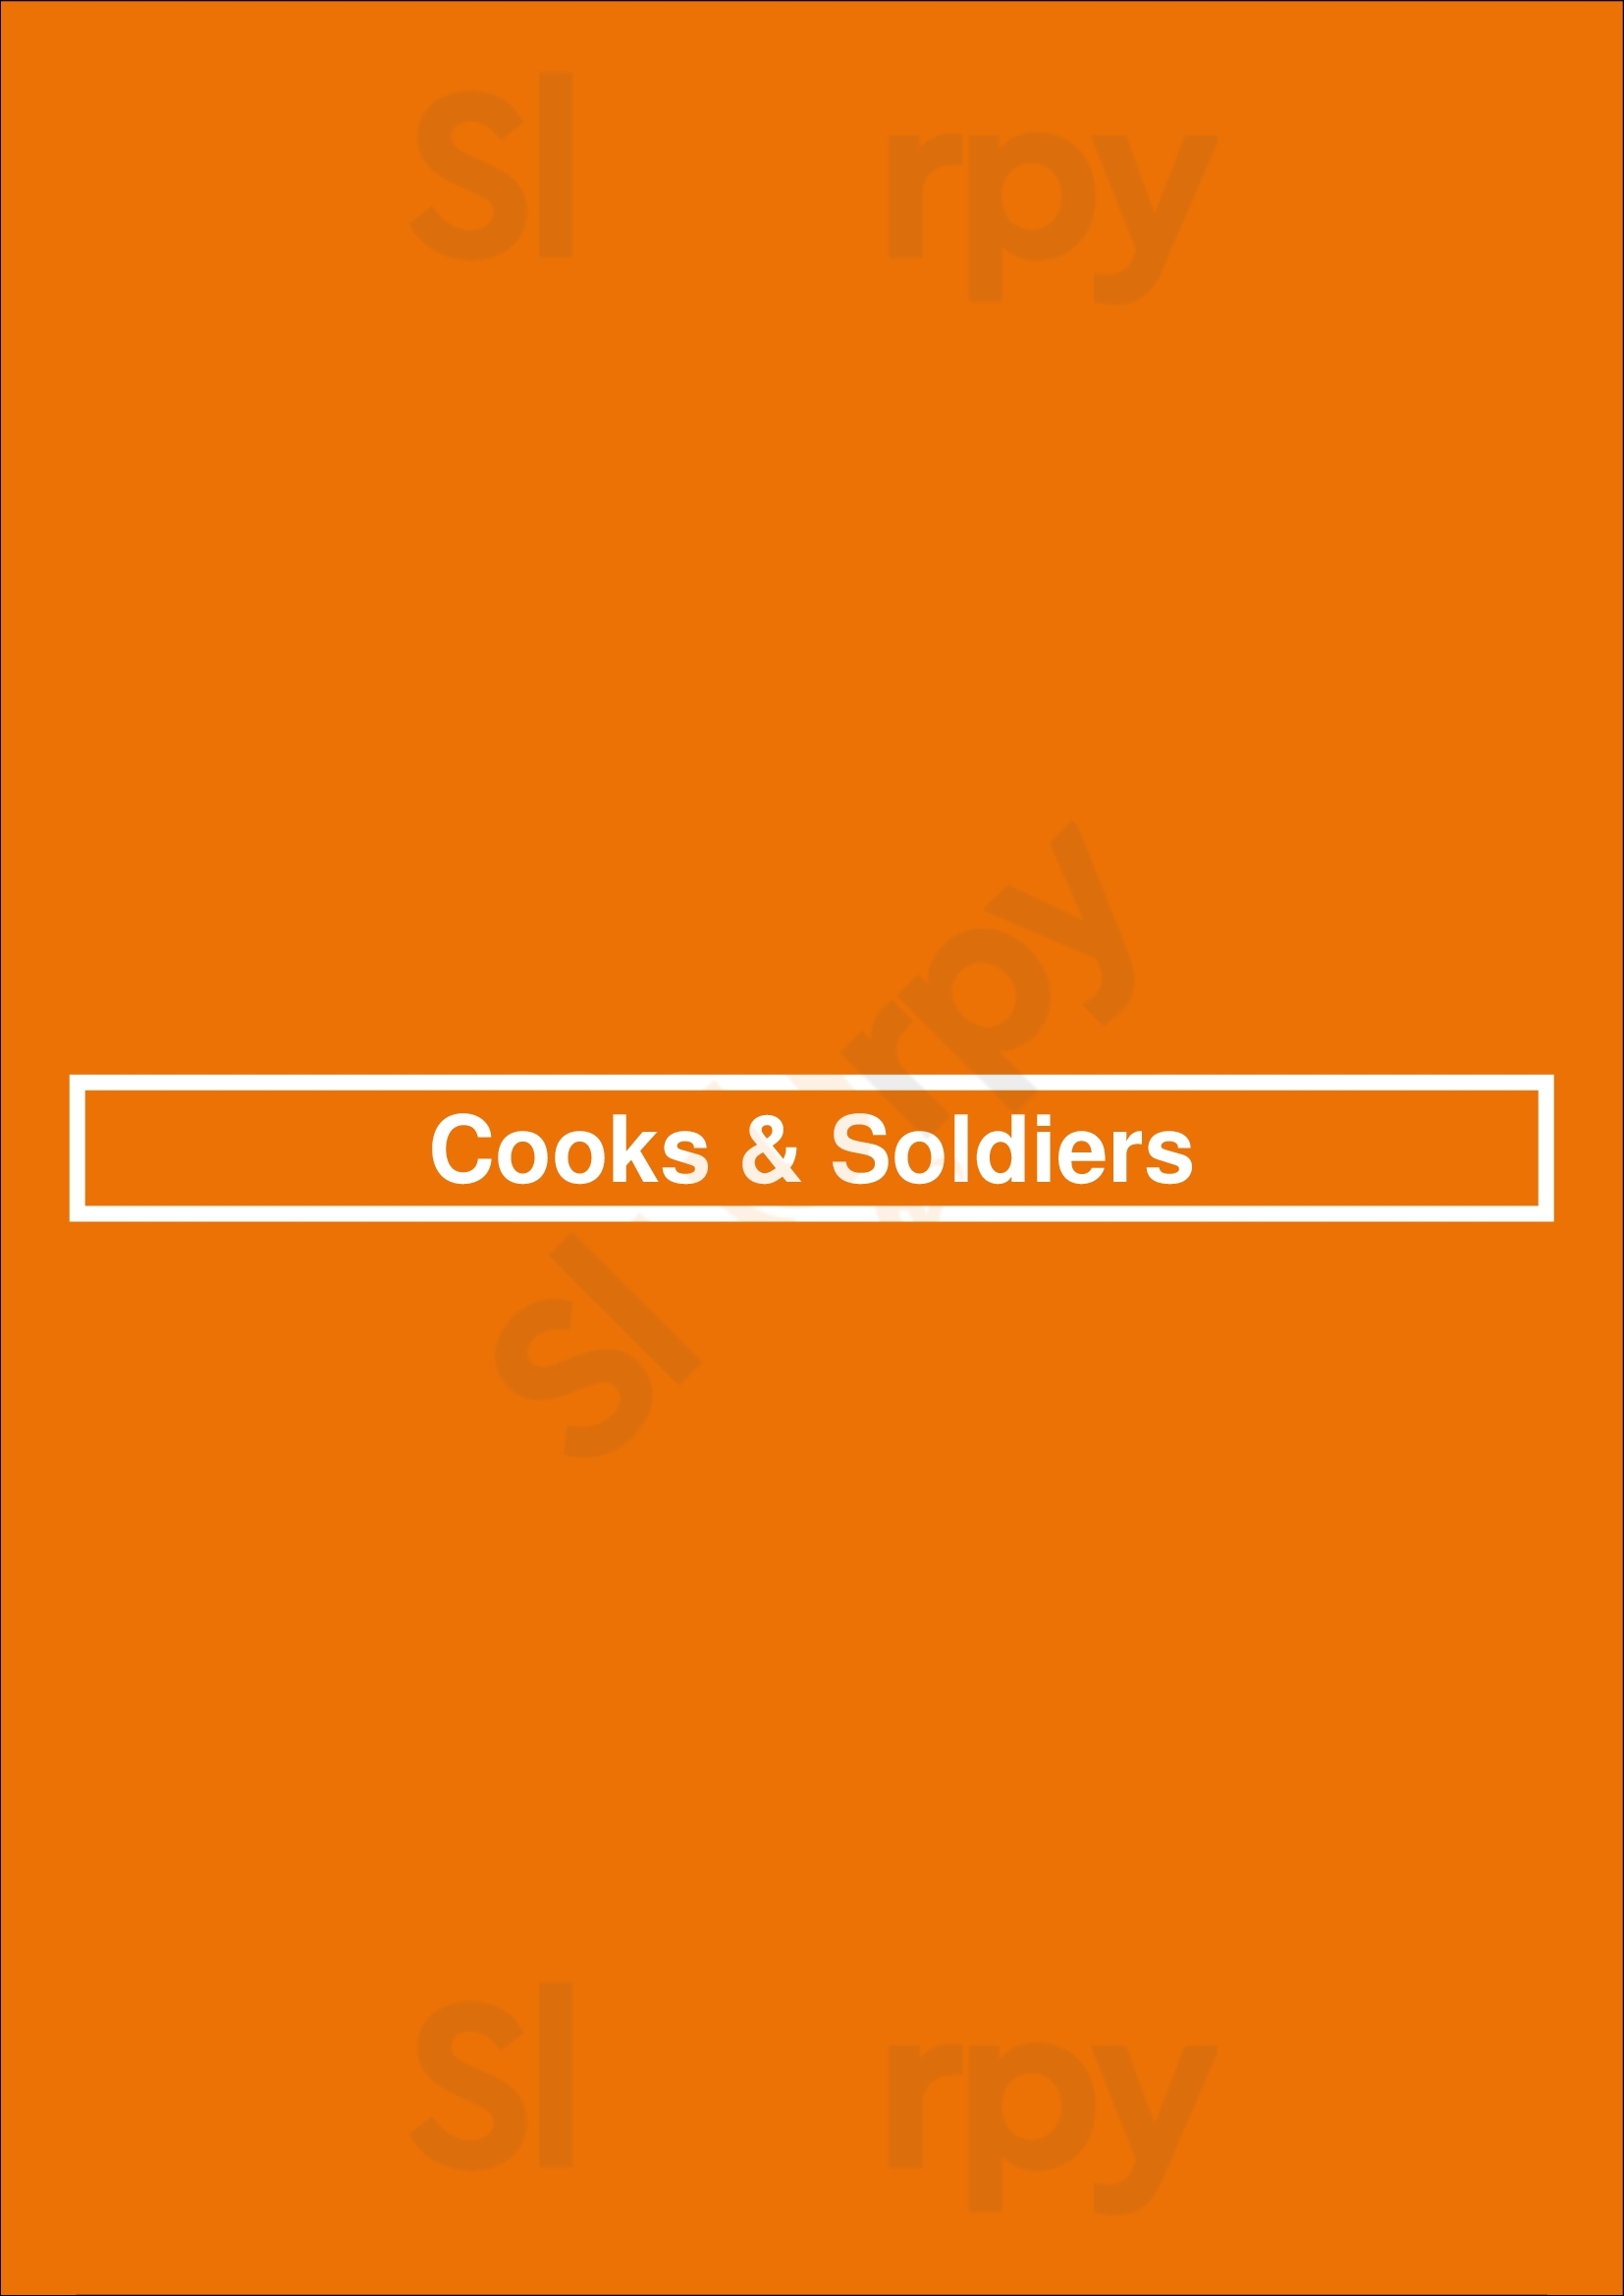 Cooks & Soldiers Atlanta Menu - 1